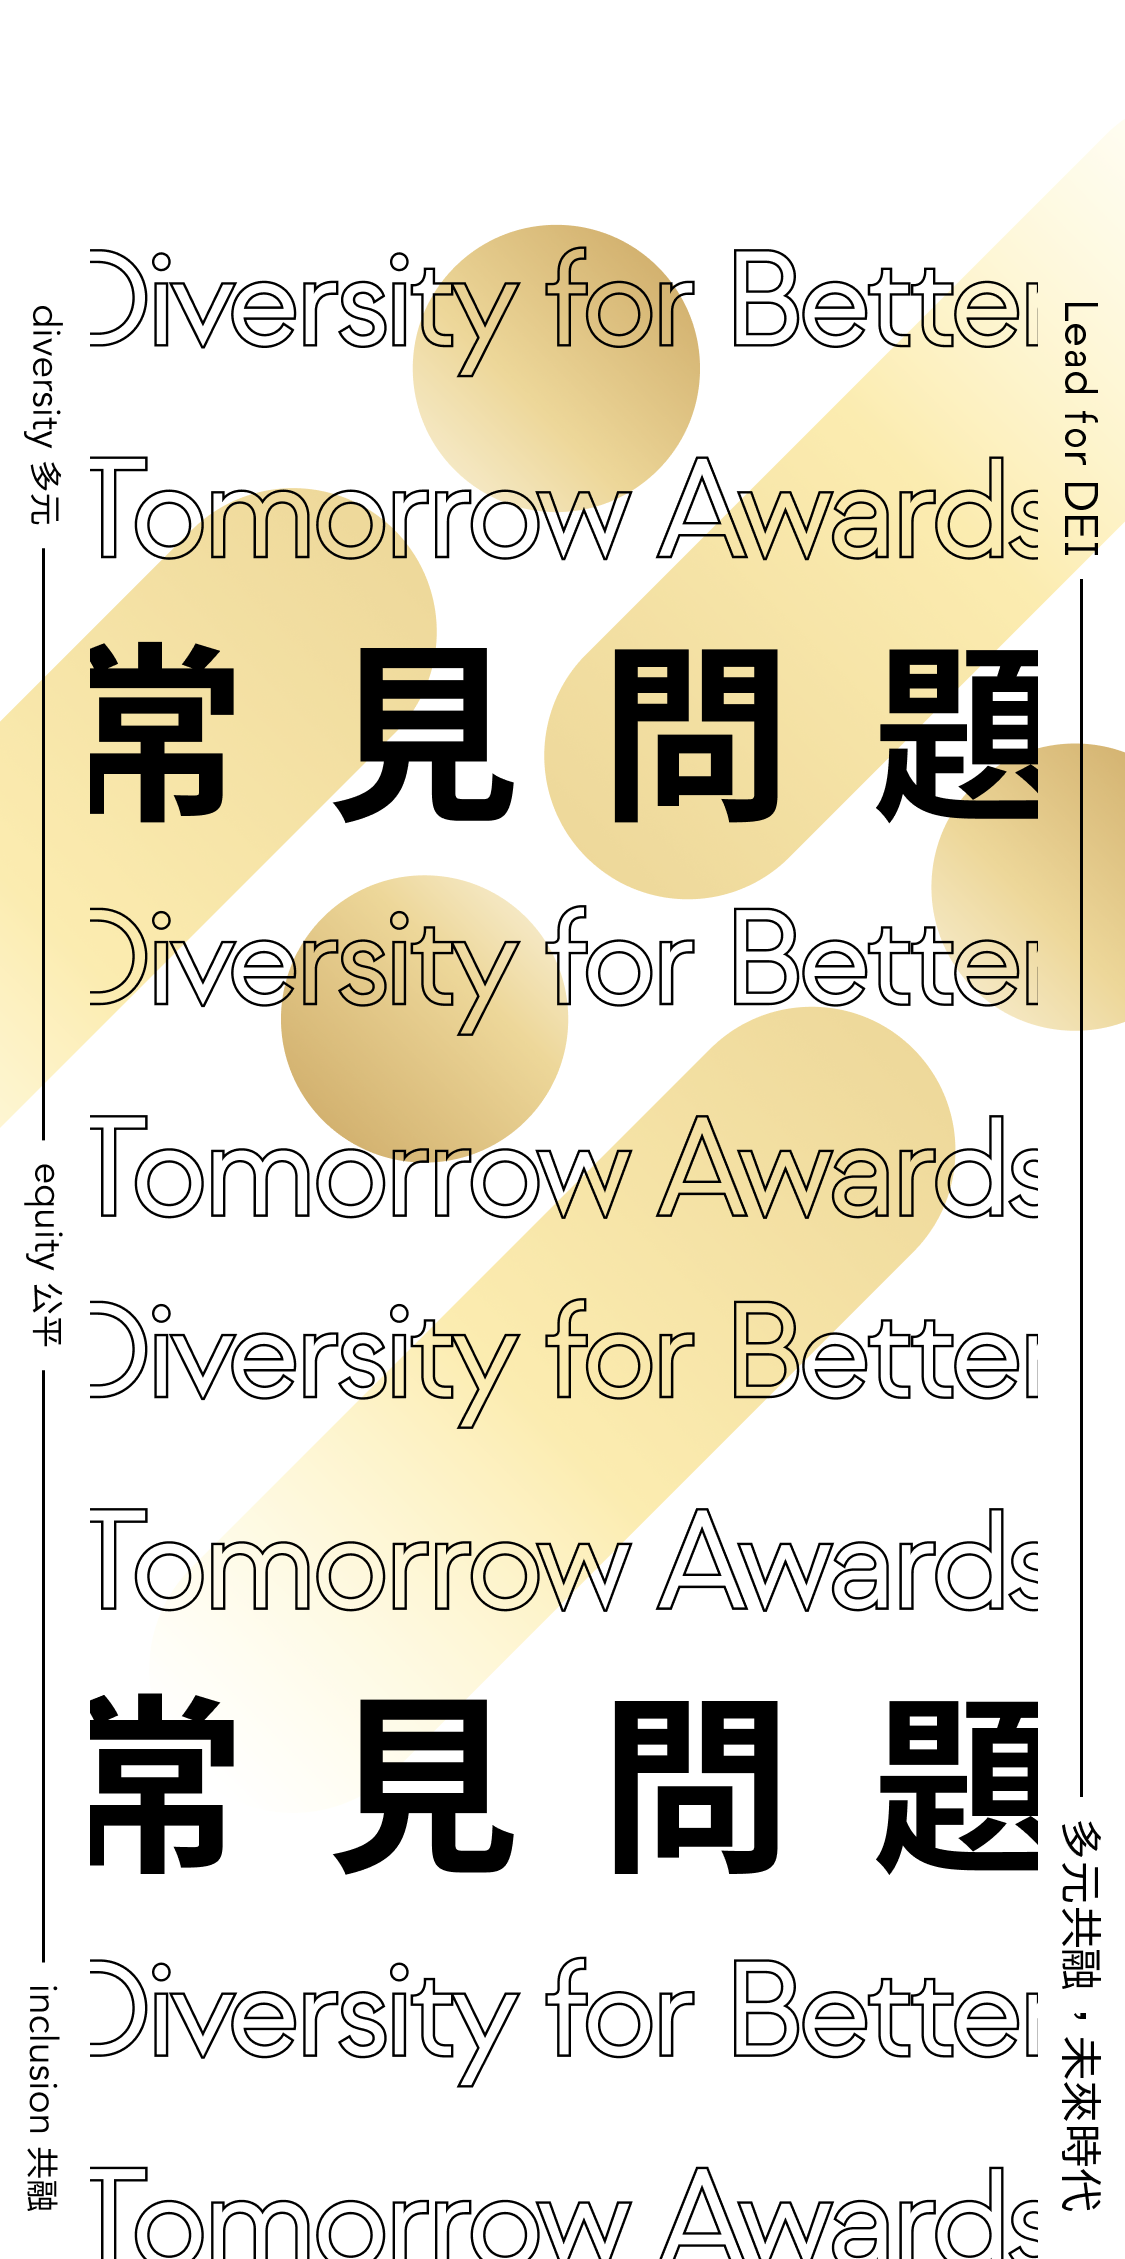 Diversity for Better Tomorrow Awards